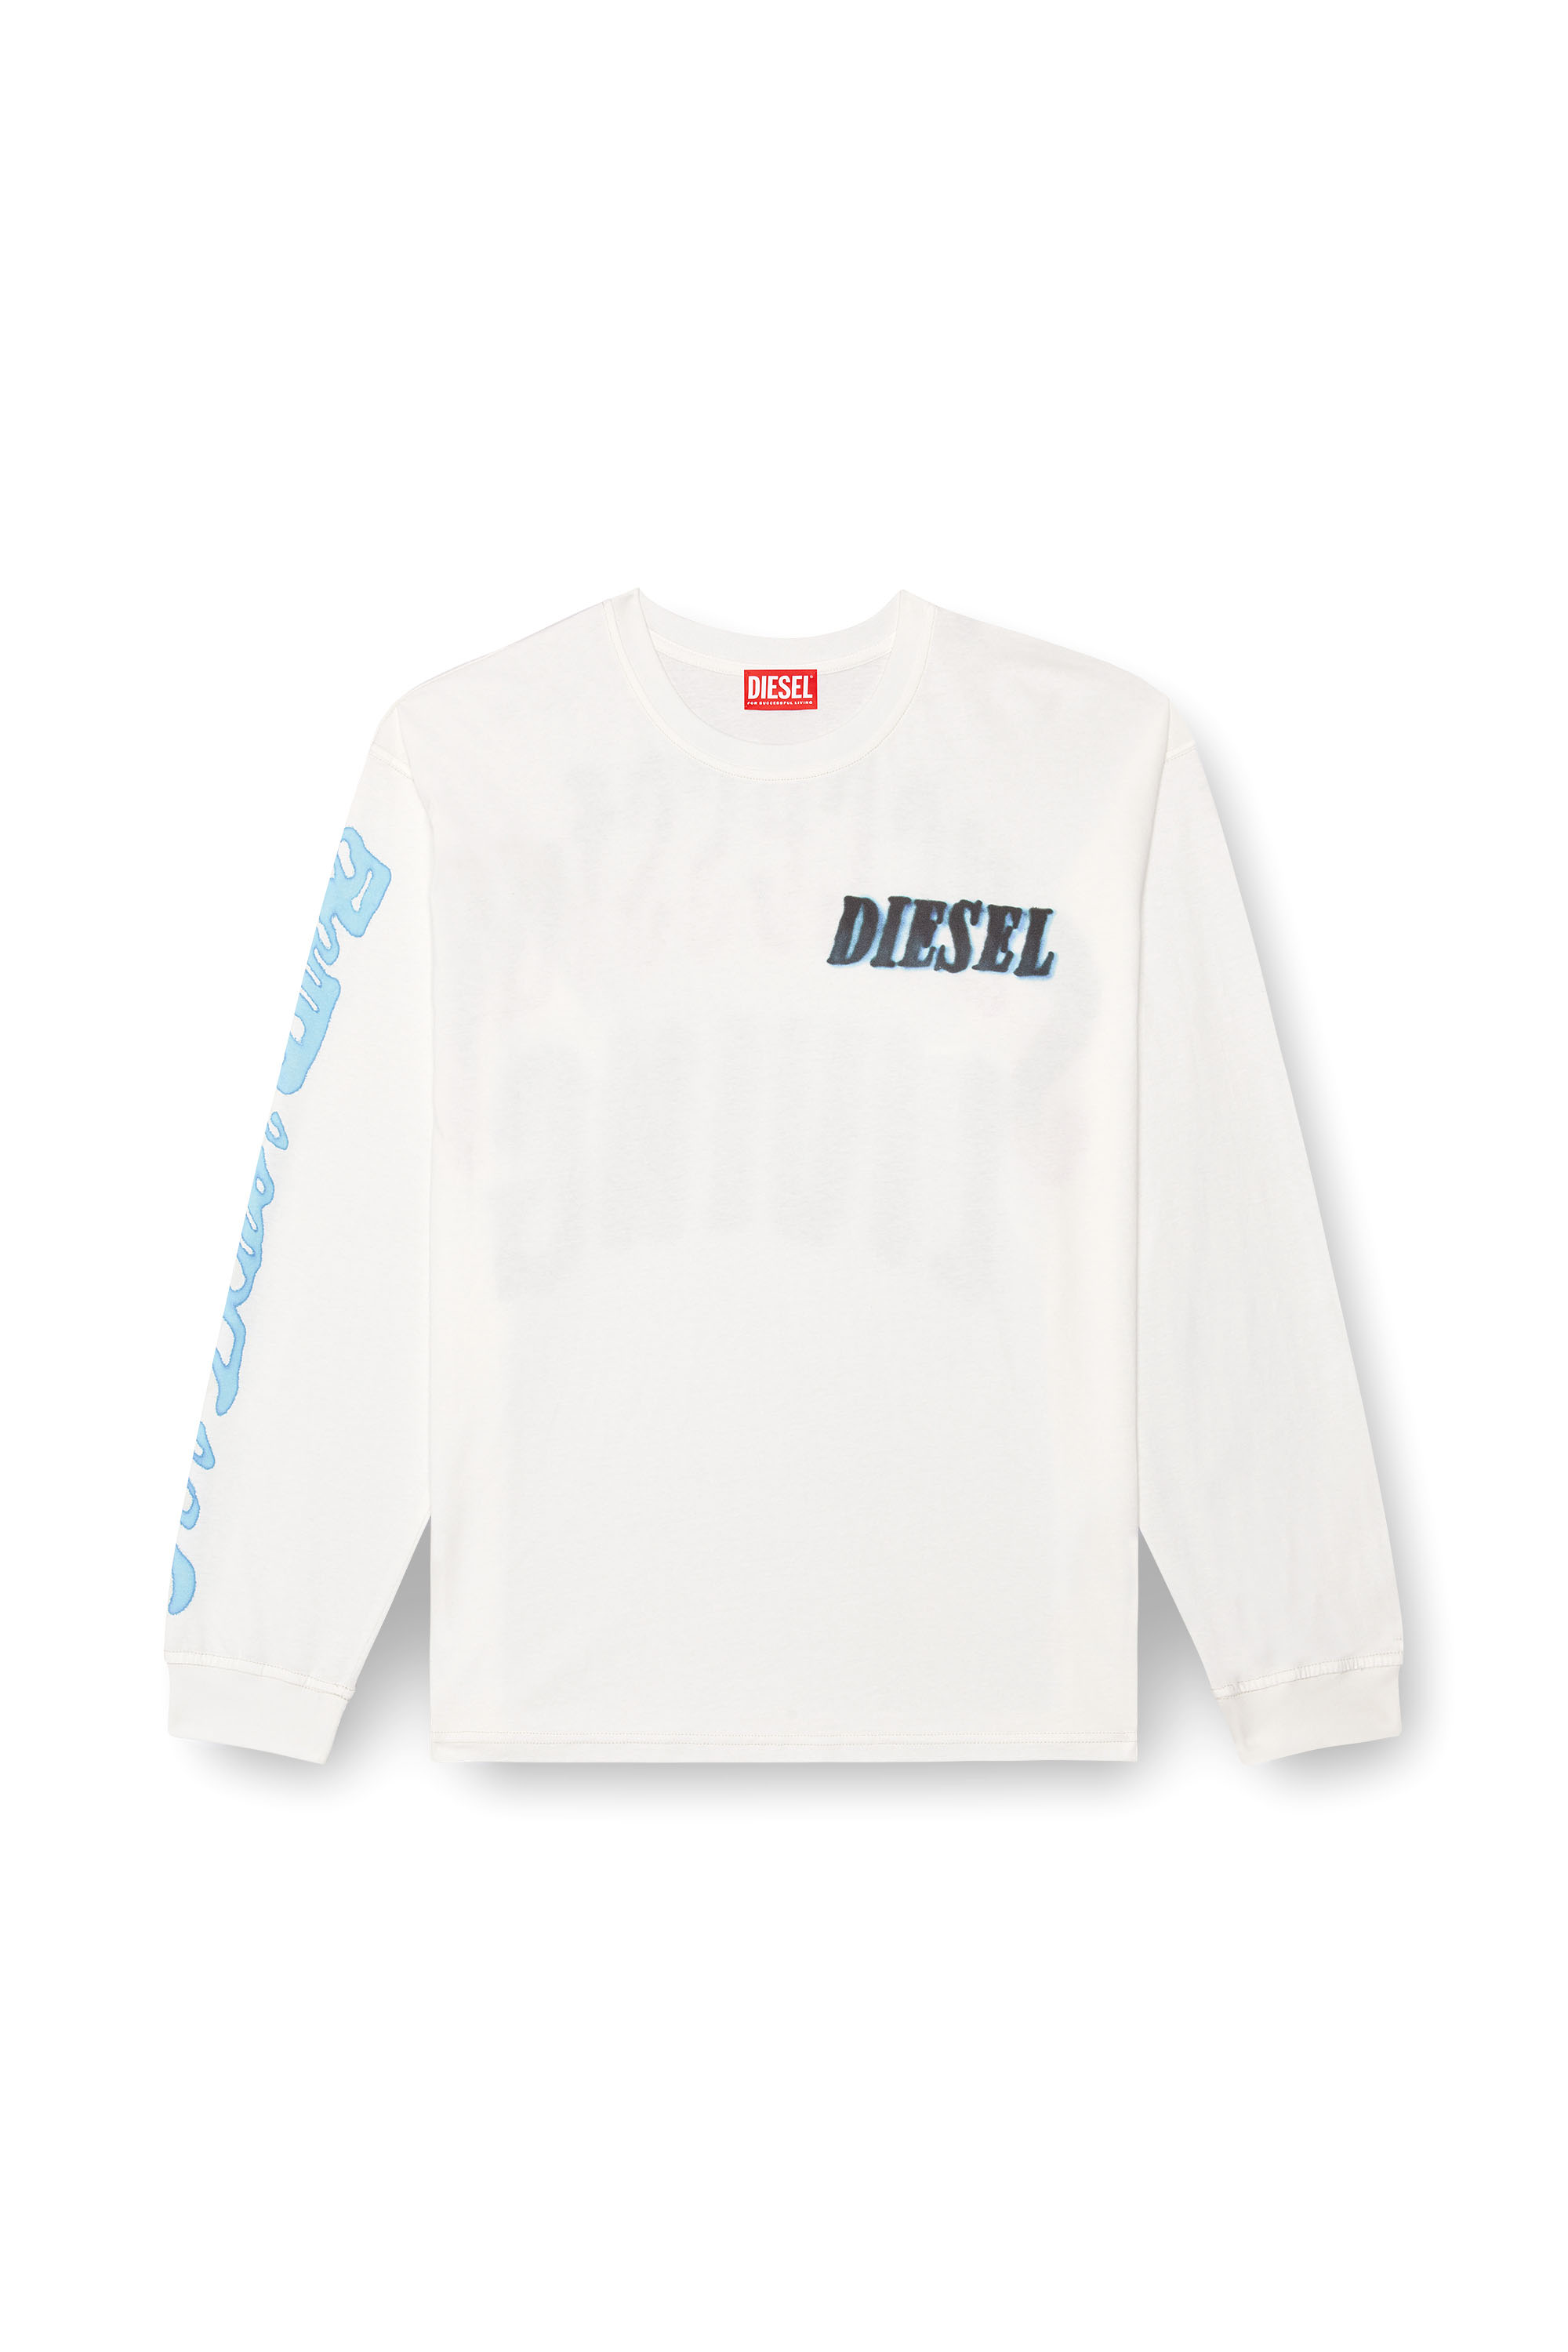 Diesel - T-BOXT-LS-Q15, Hombre Camiseta de manga larga con estampados del logotipo in Blanco - Image 5